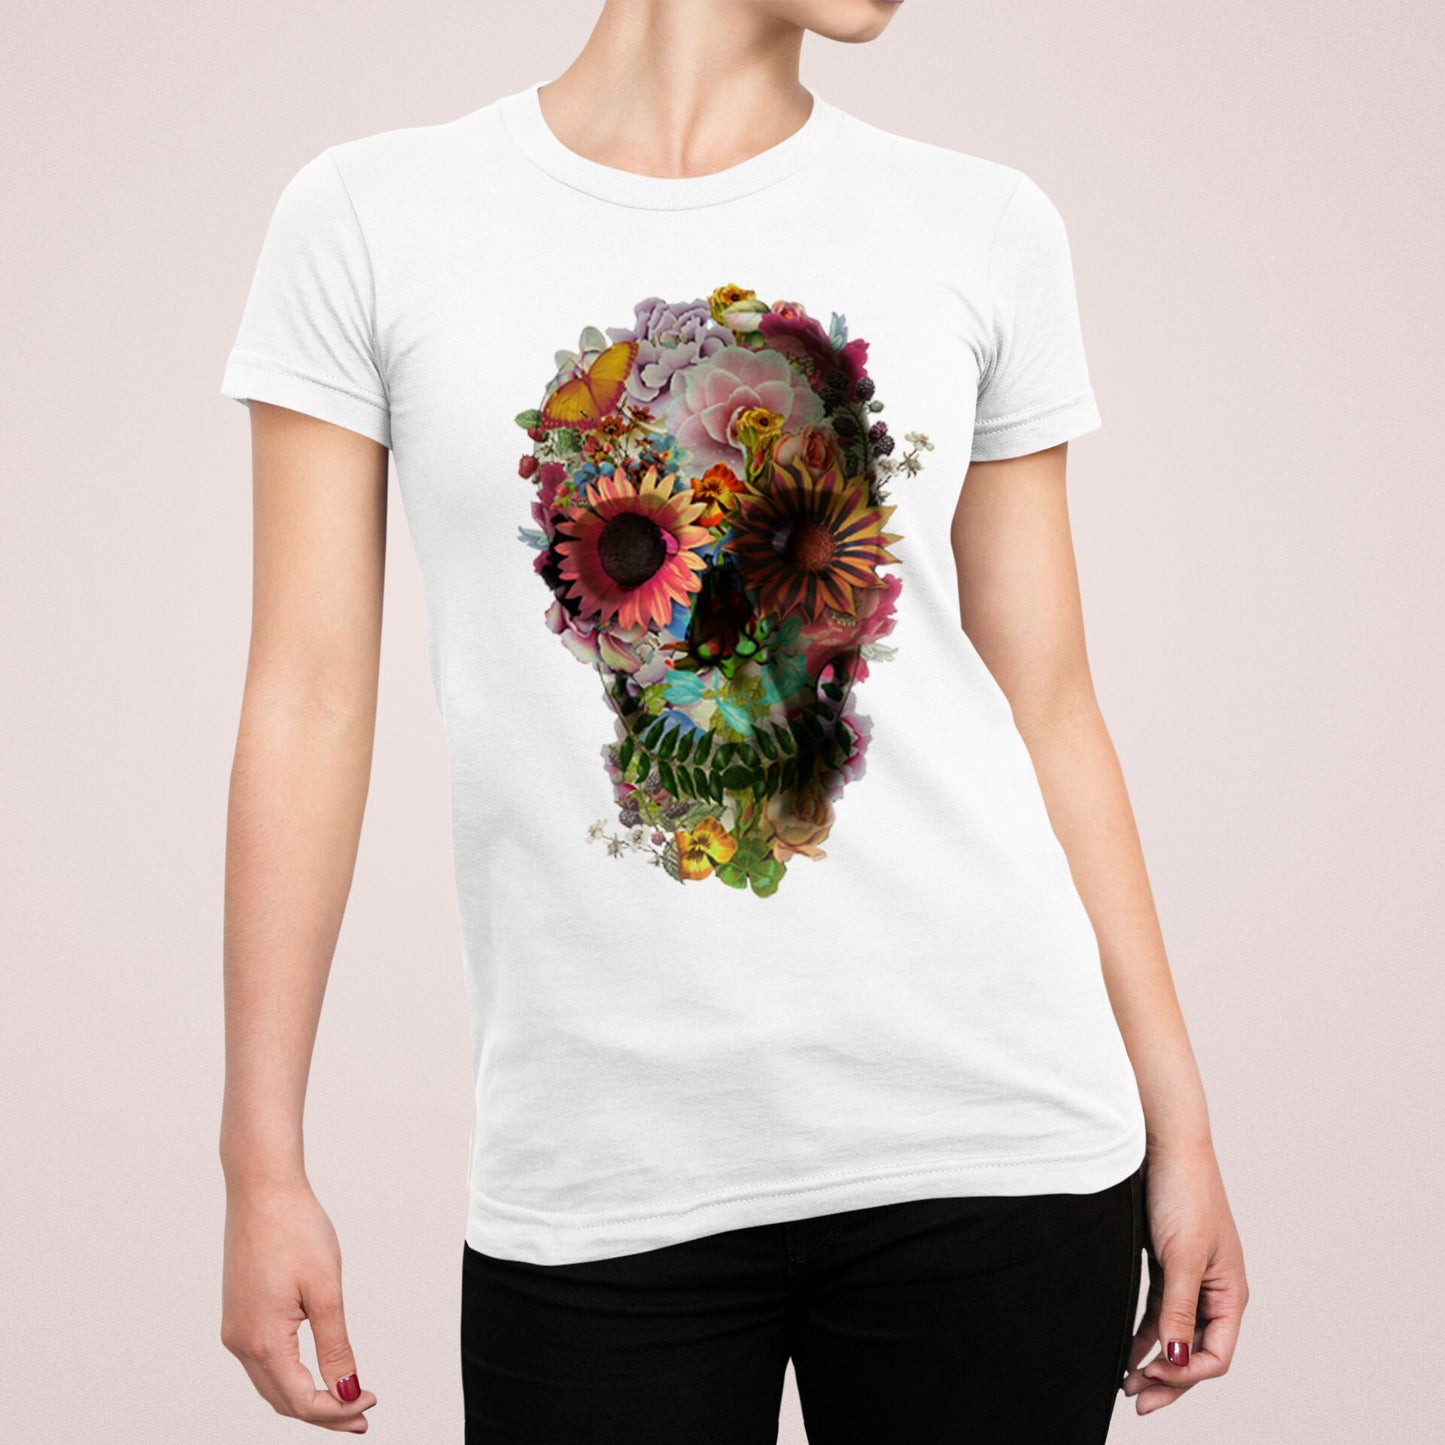 Floral Skull Print Womens T shirt, Sugar Skull Art Tshirt Gift For Her, Nature Skull Illustration Boho Graphic Tee, Bella Canvas T-Shirt